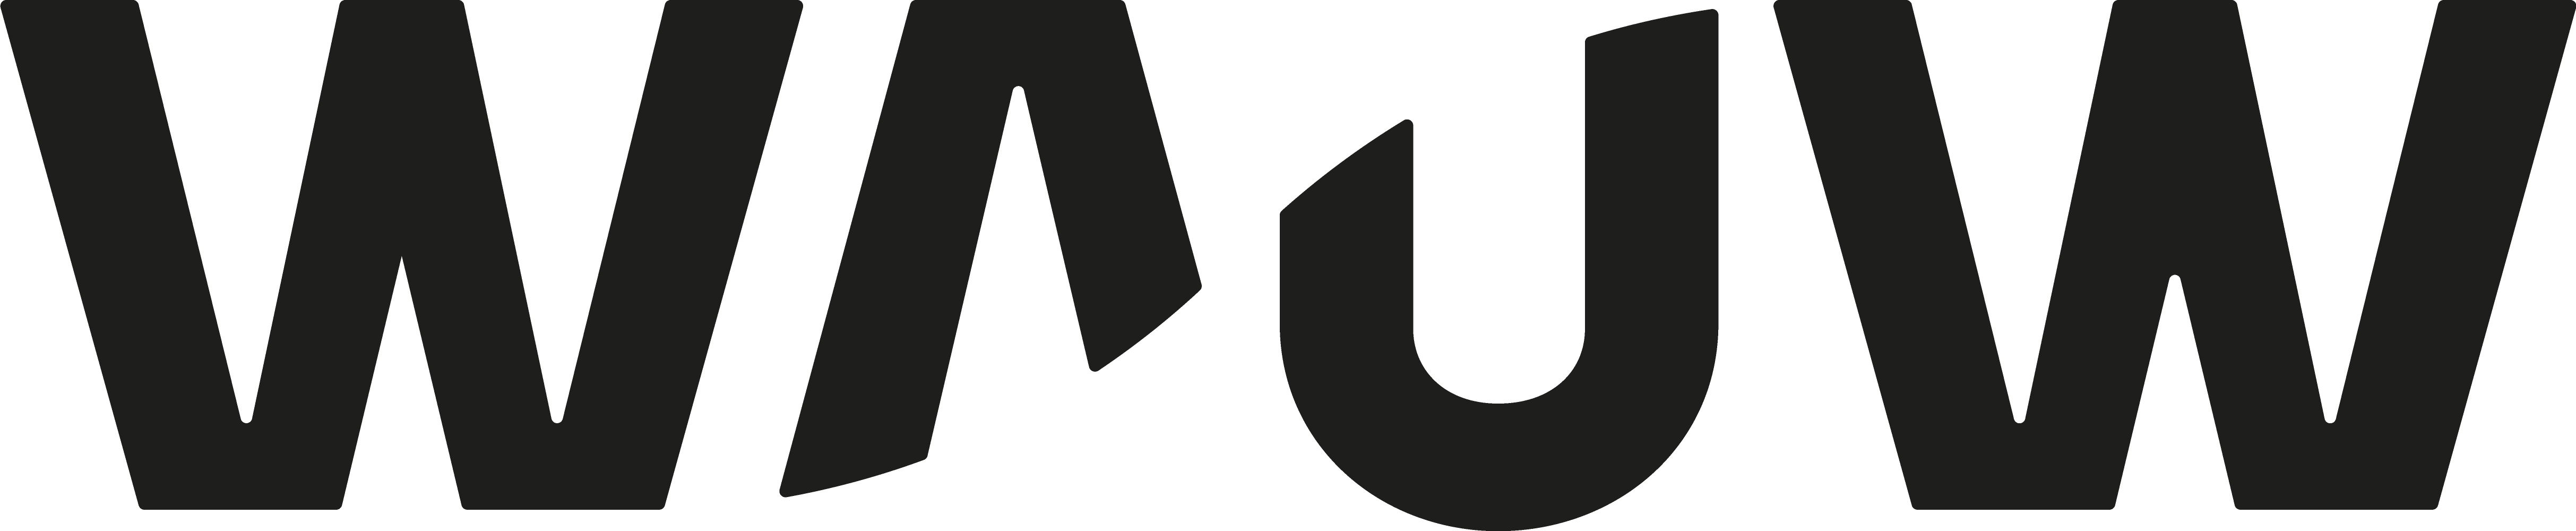 WAUW Digital & Creative Agency logo